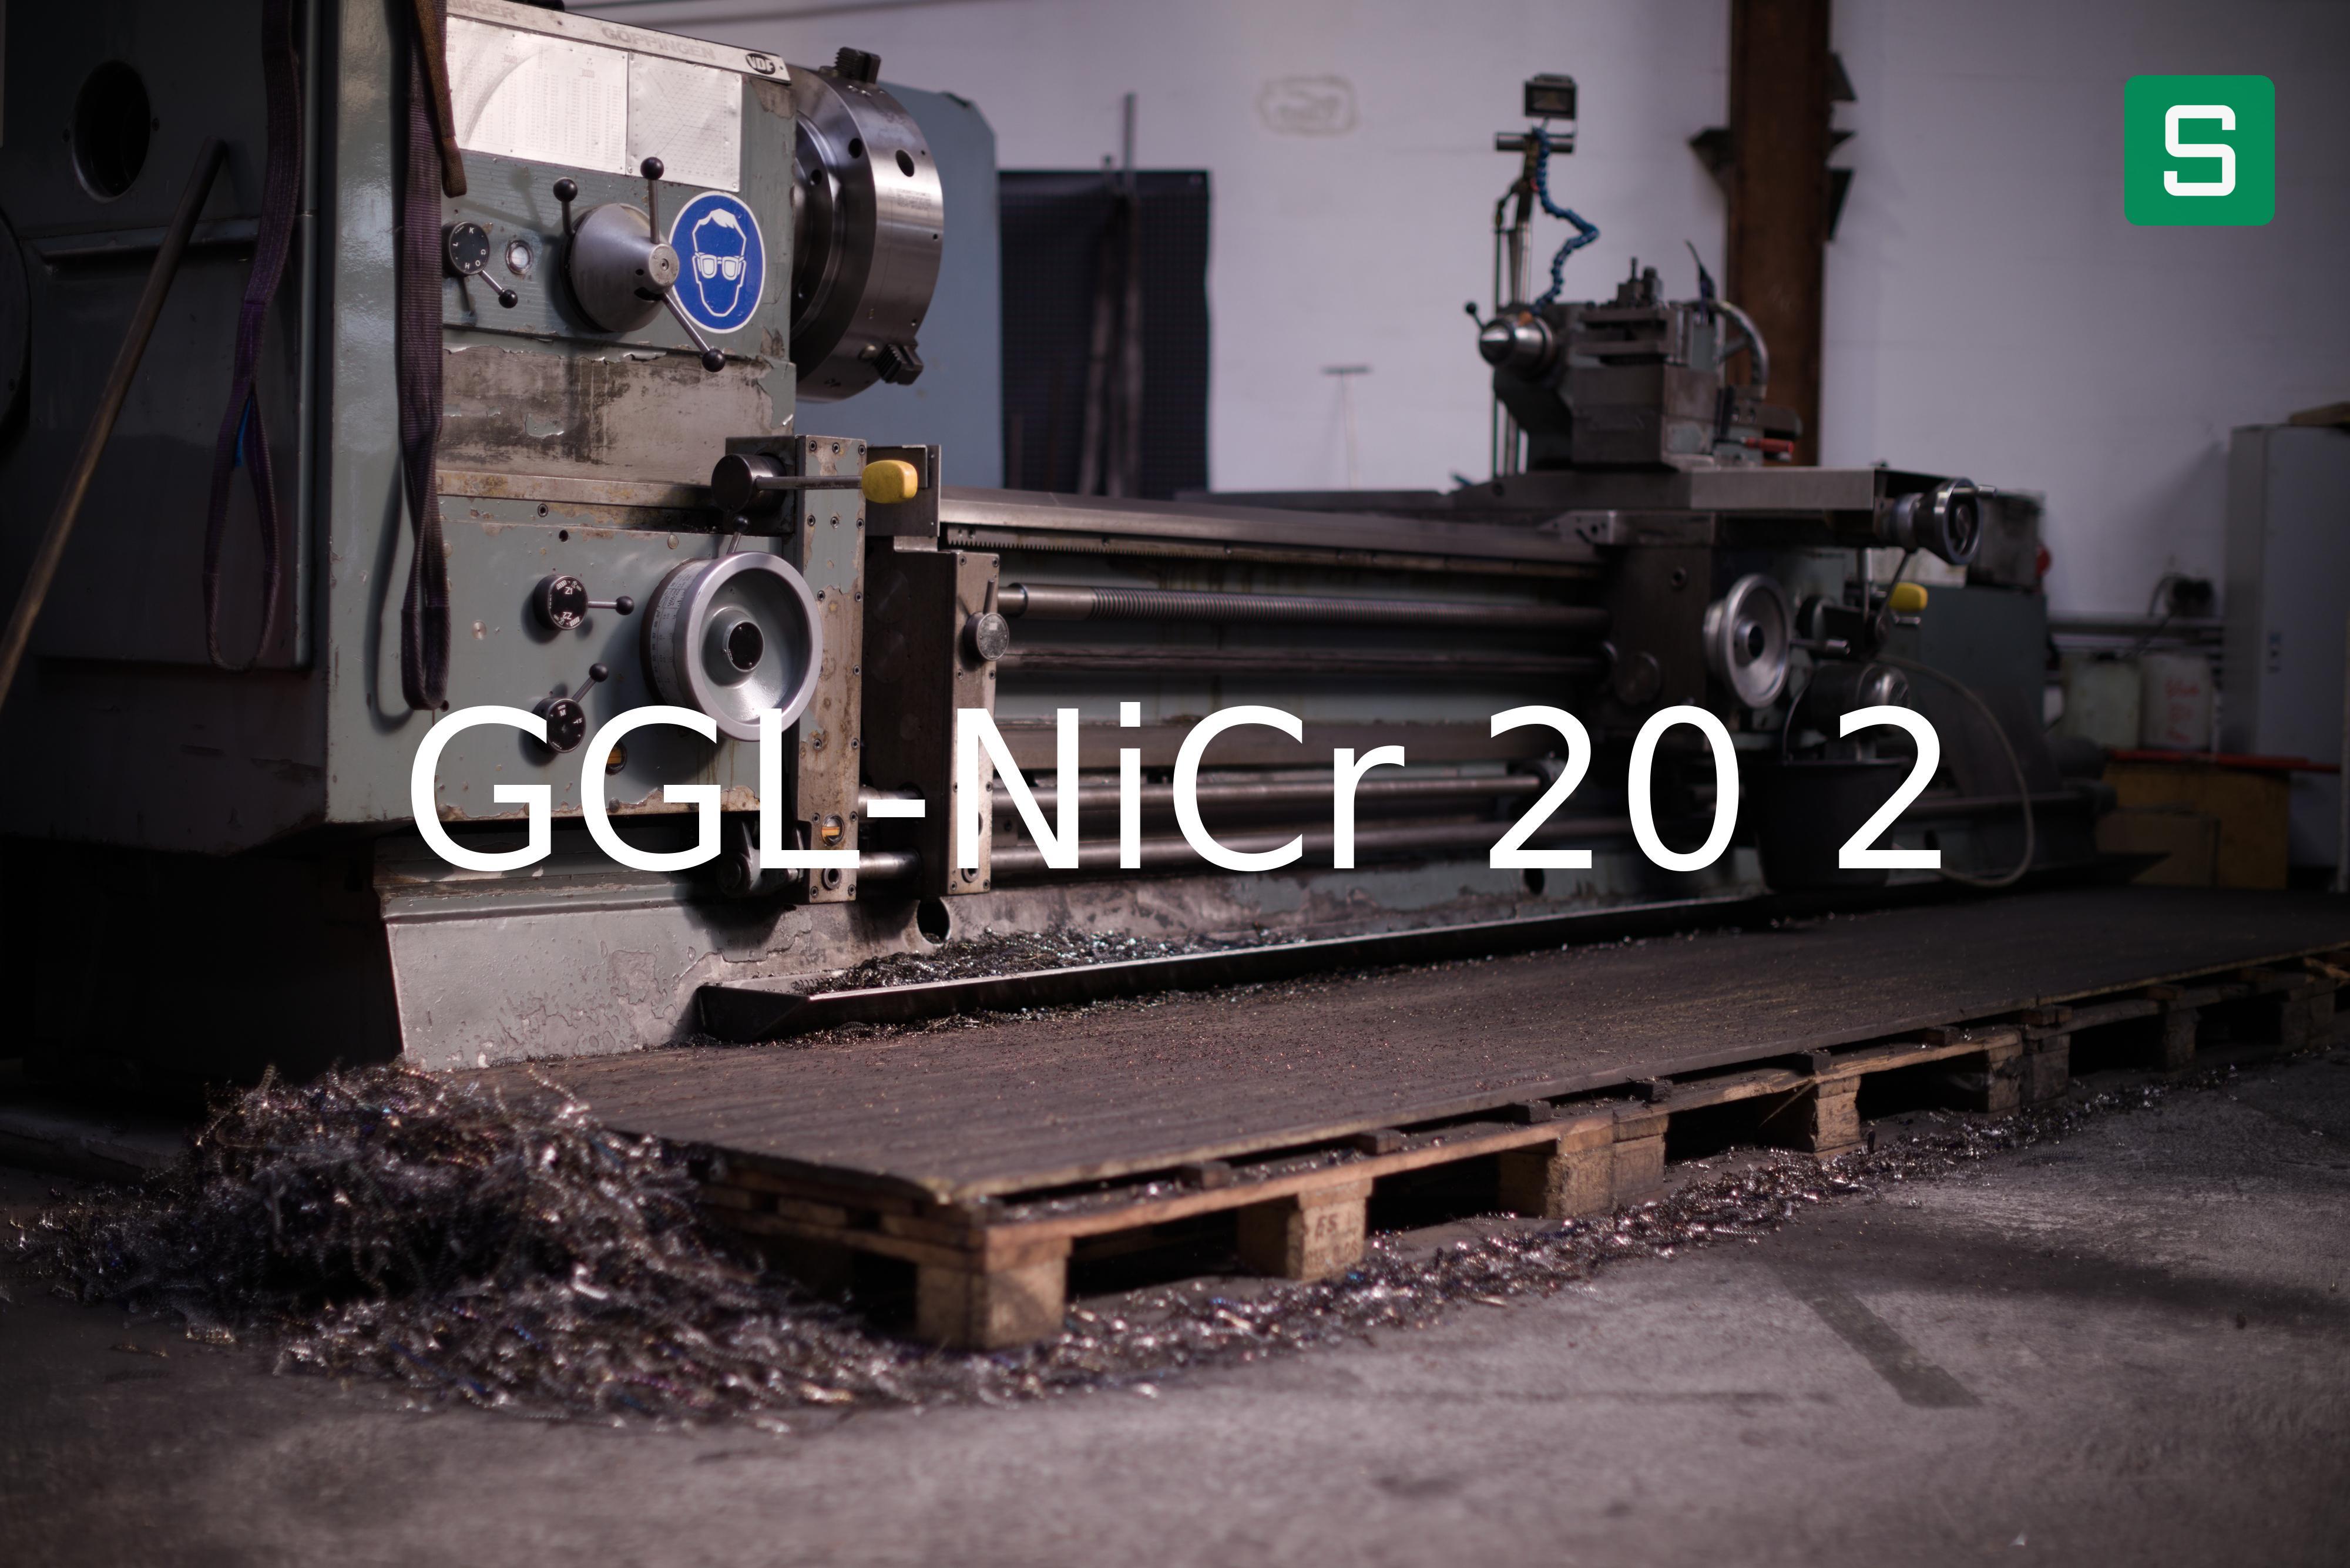 Steel Material: GGL-NiCr 20 2